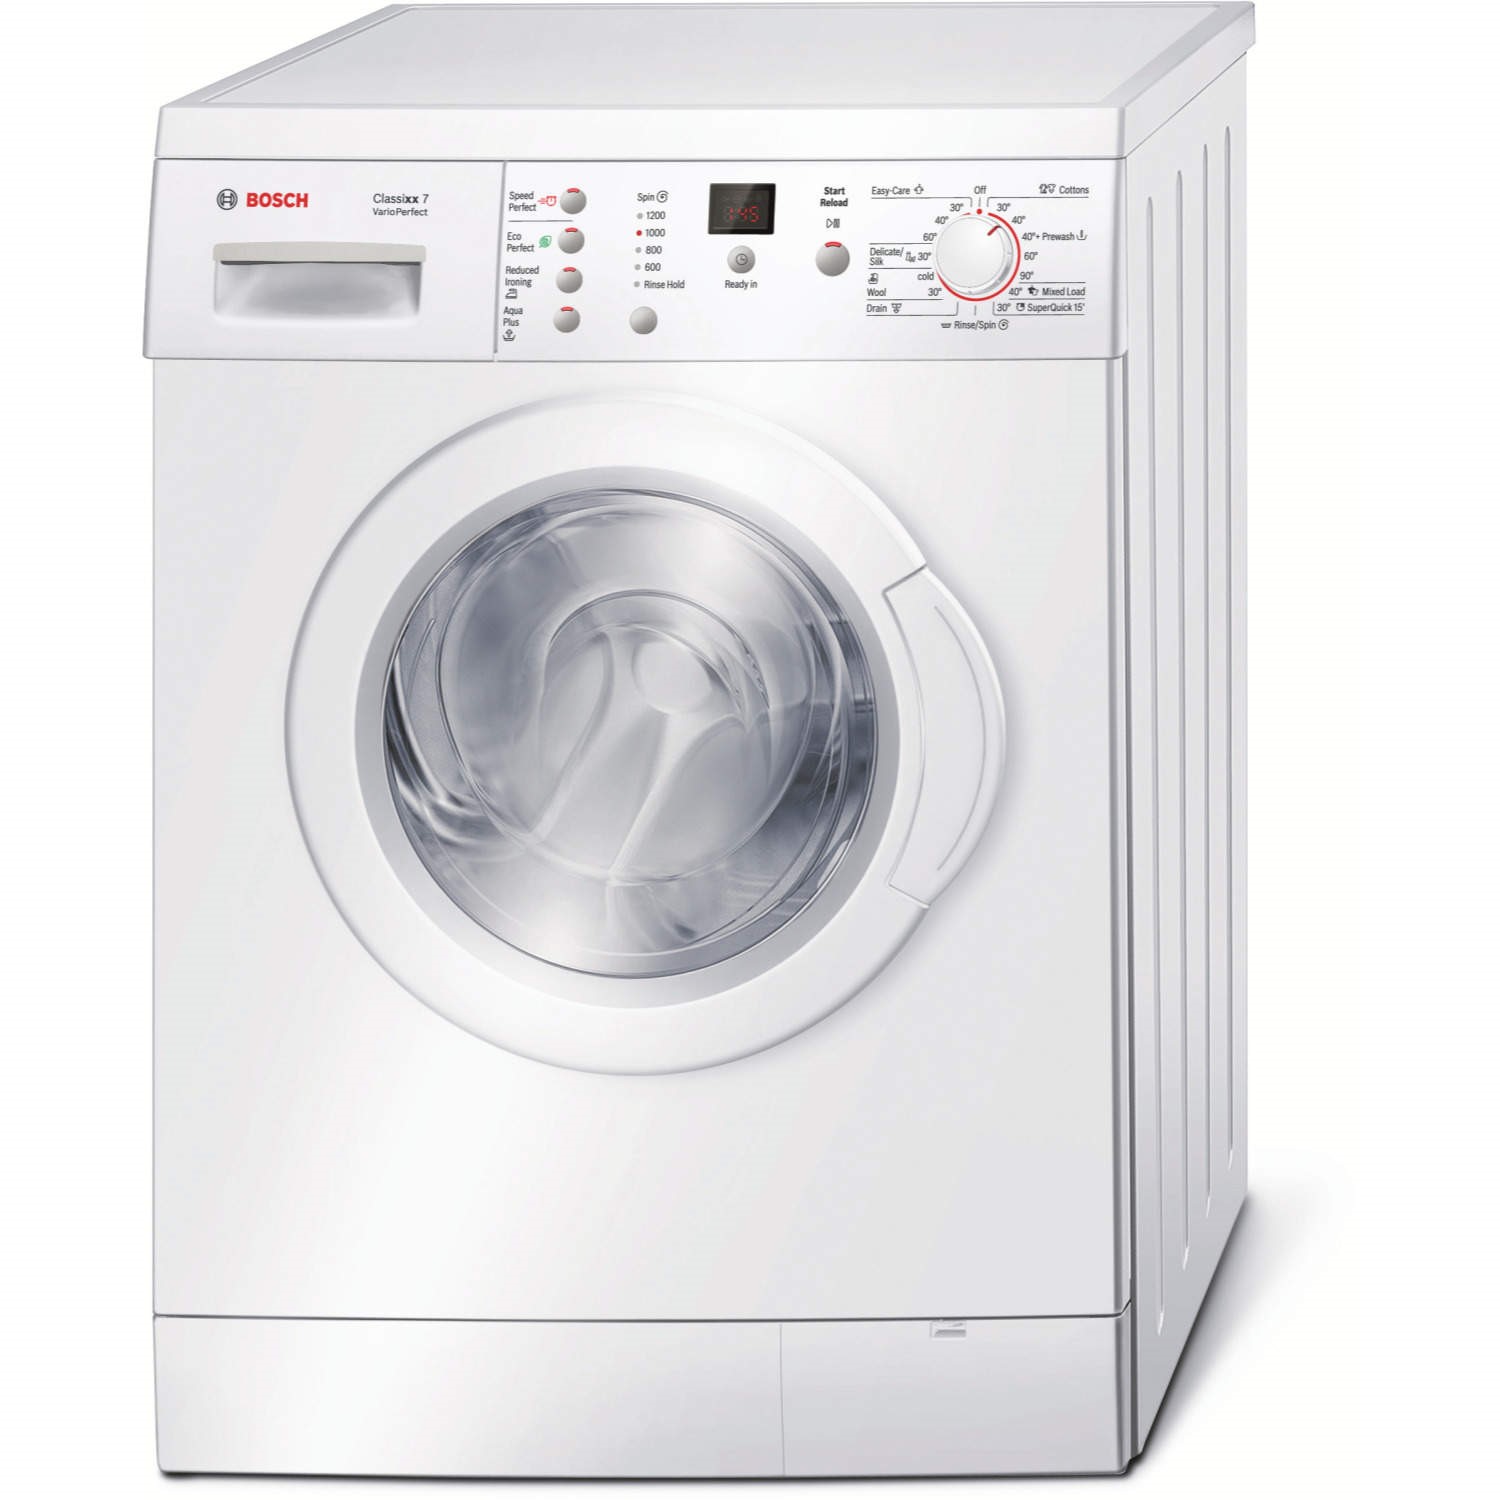 Bosch Wae24368Gb Classixx 7 Varioperfect Freestanding Washing Machine -  White | Appliances Direct